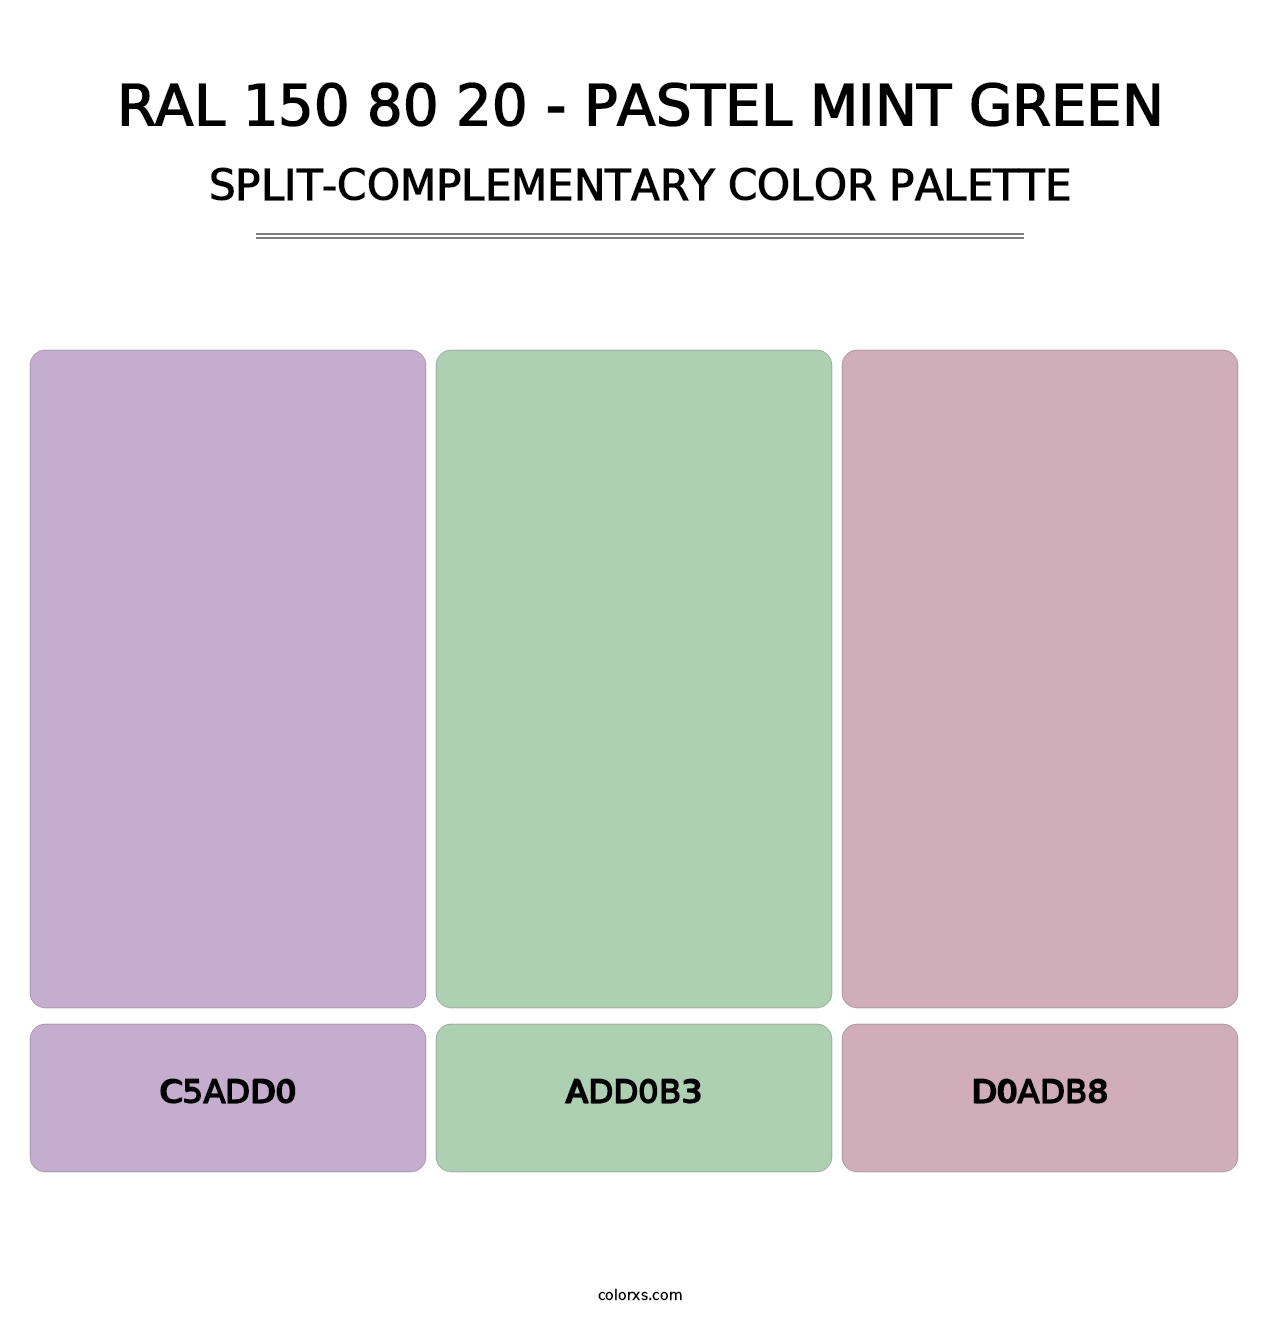 RAL 150 80 20 - Pastel Mint Green - Split-Complementary Color Palette